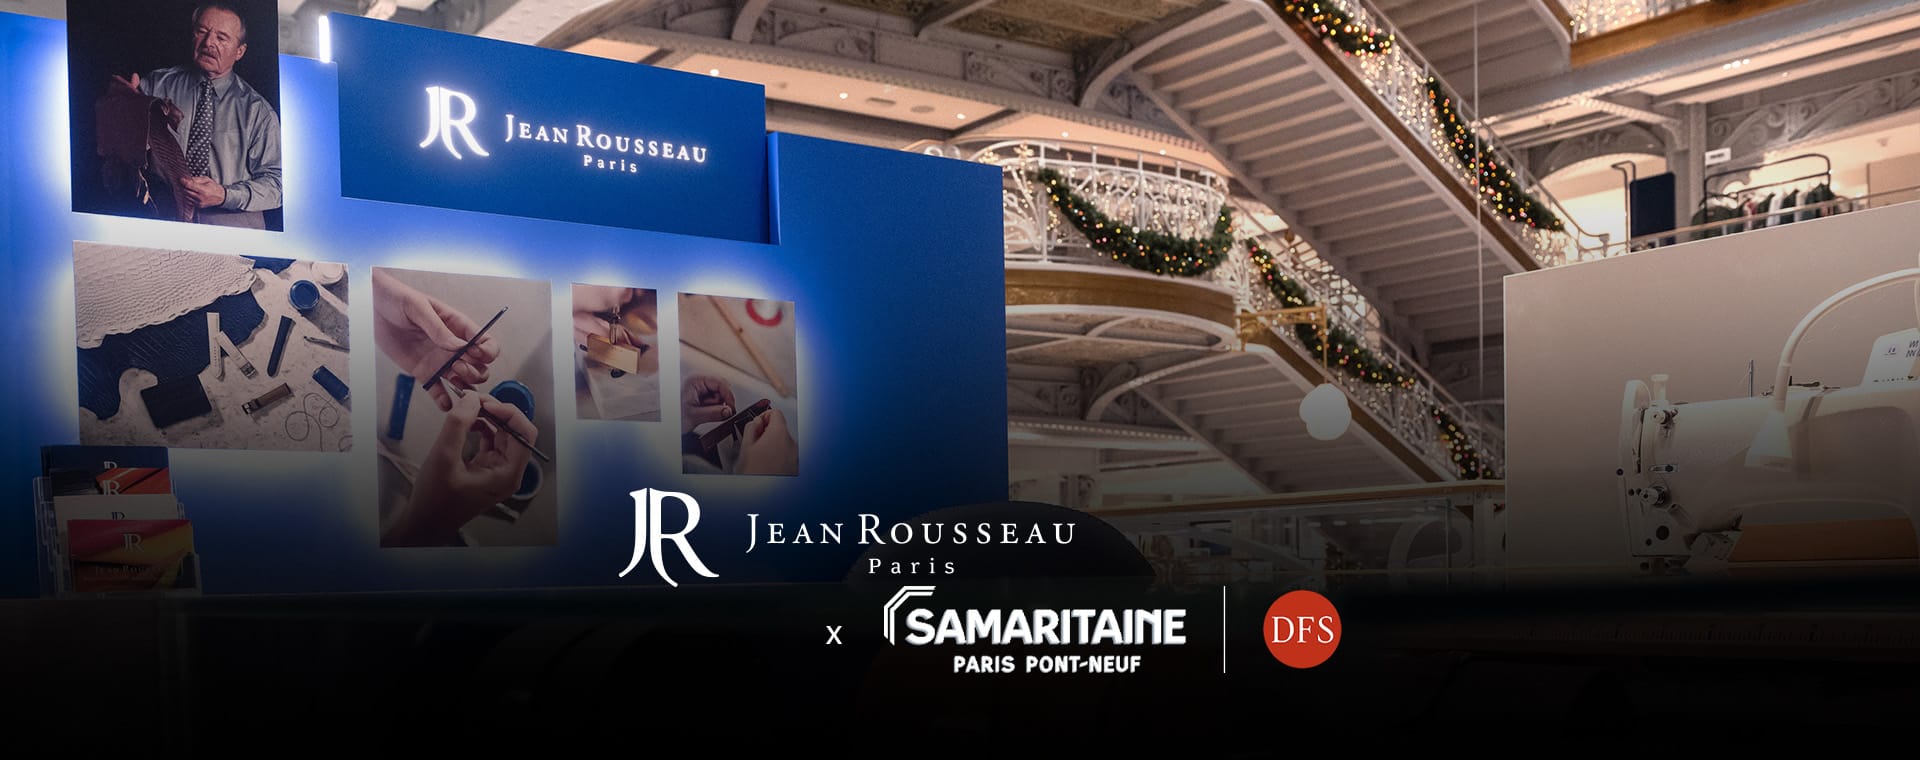 Jean Rousseau sets up its workshop at the heart of Samaritaine Paris